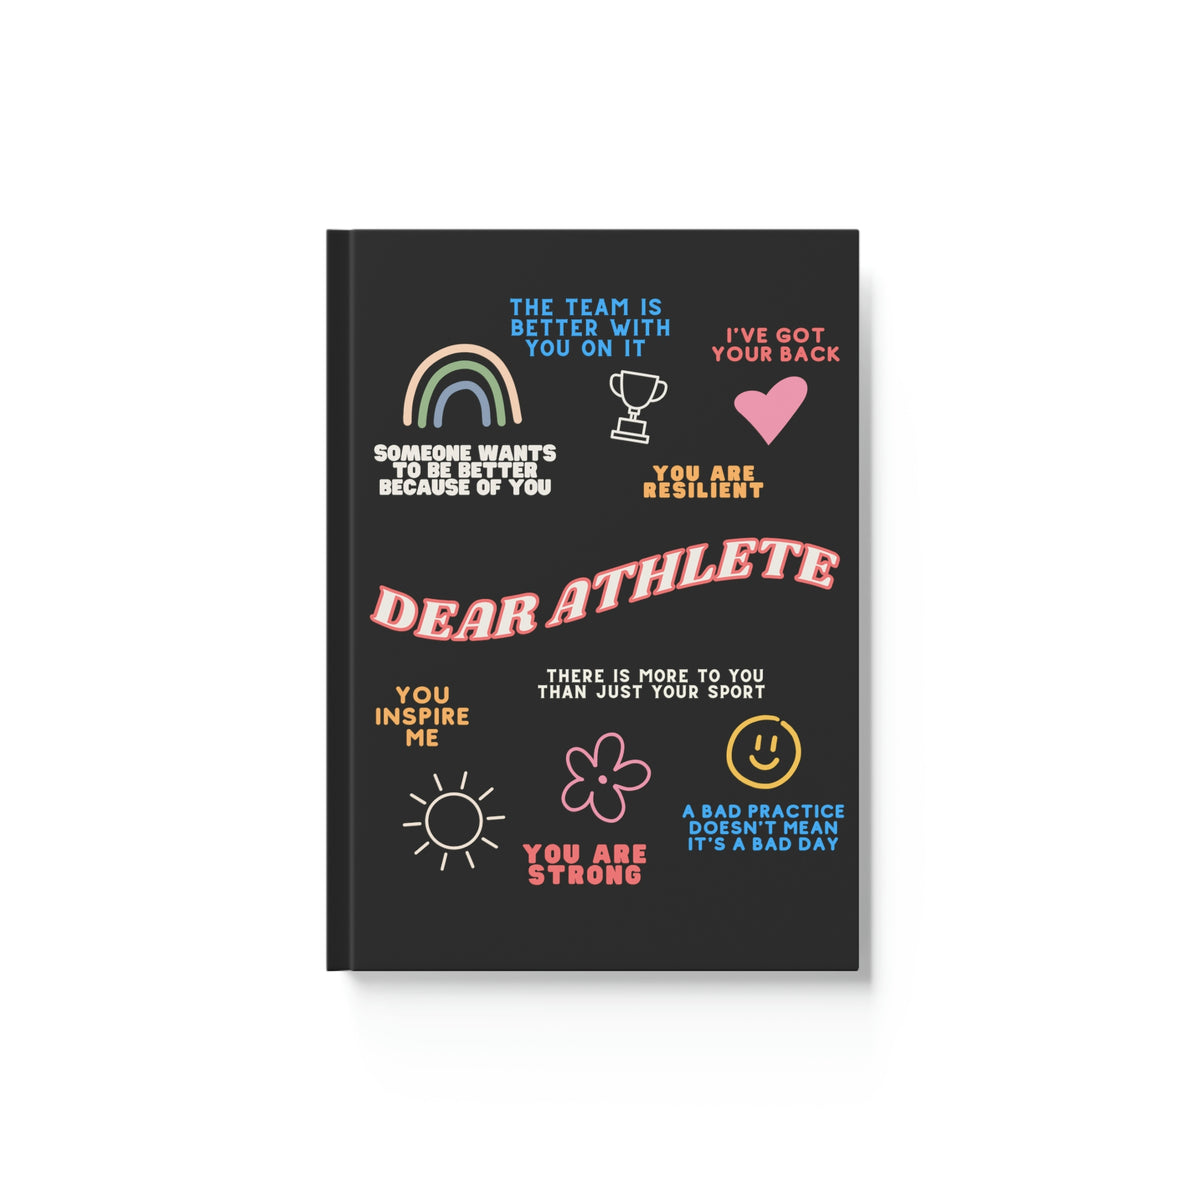 Dear Athlete Hardcover Journal Notebook